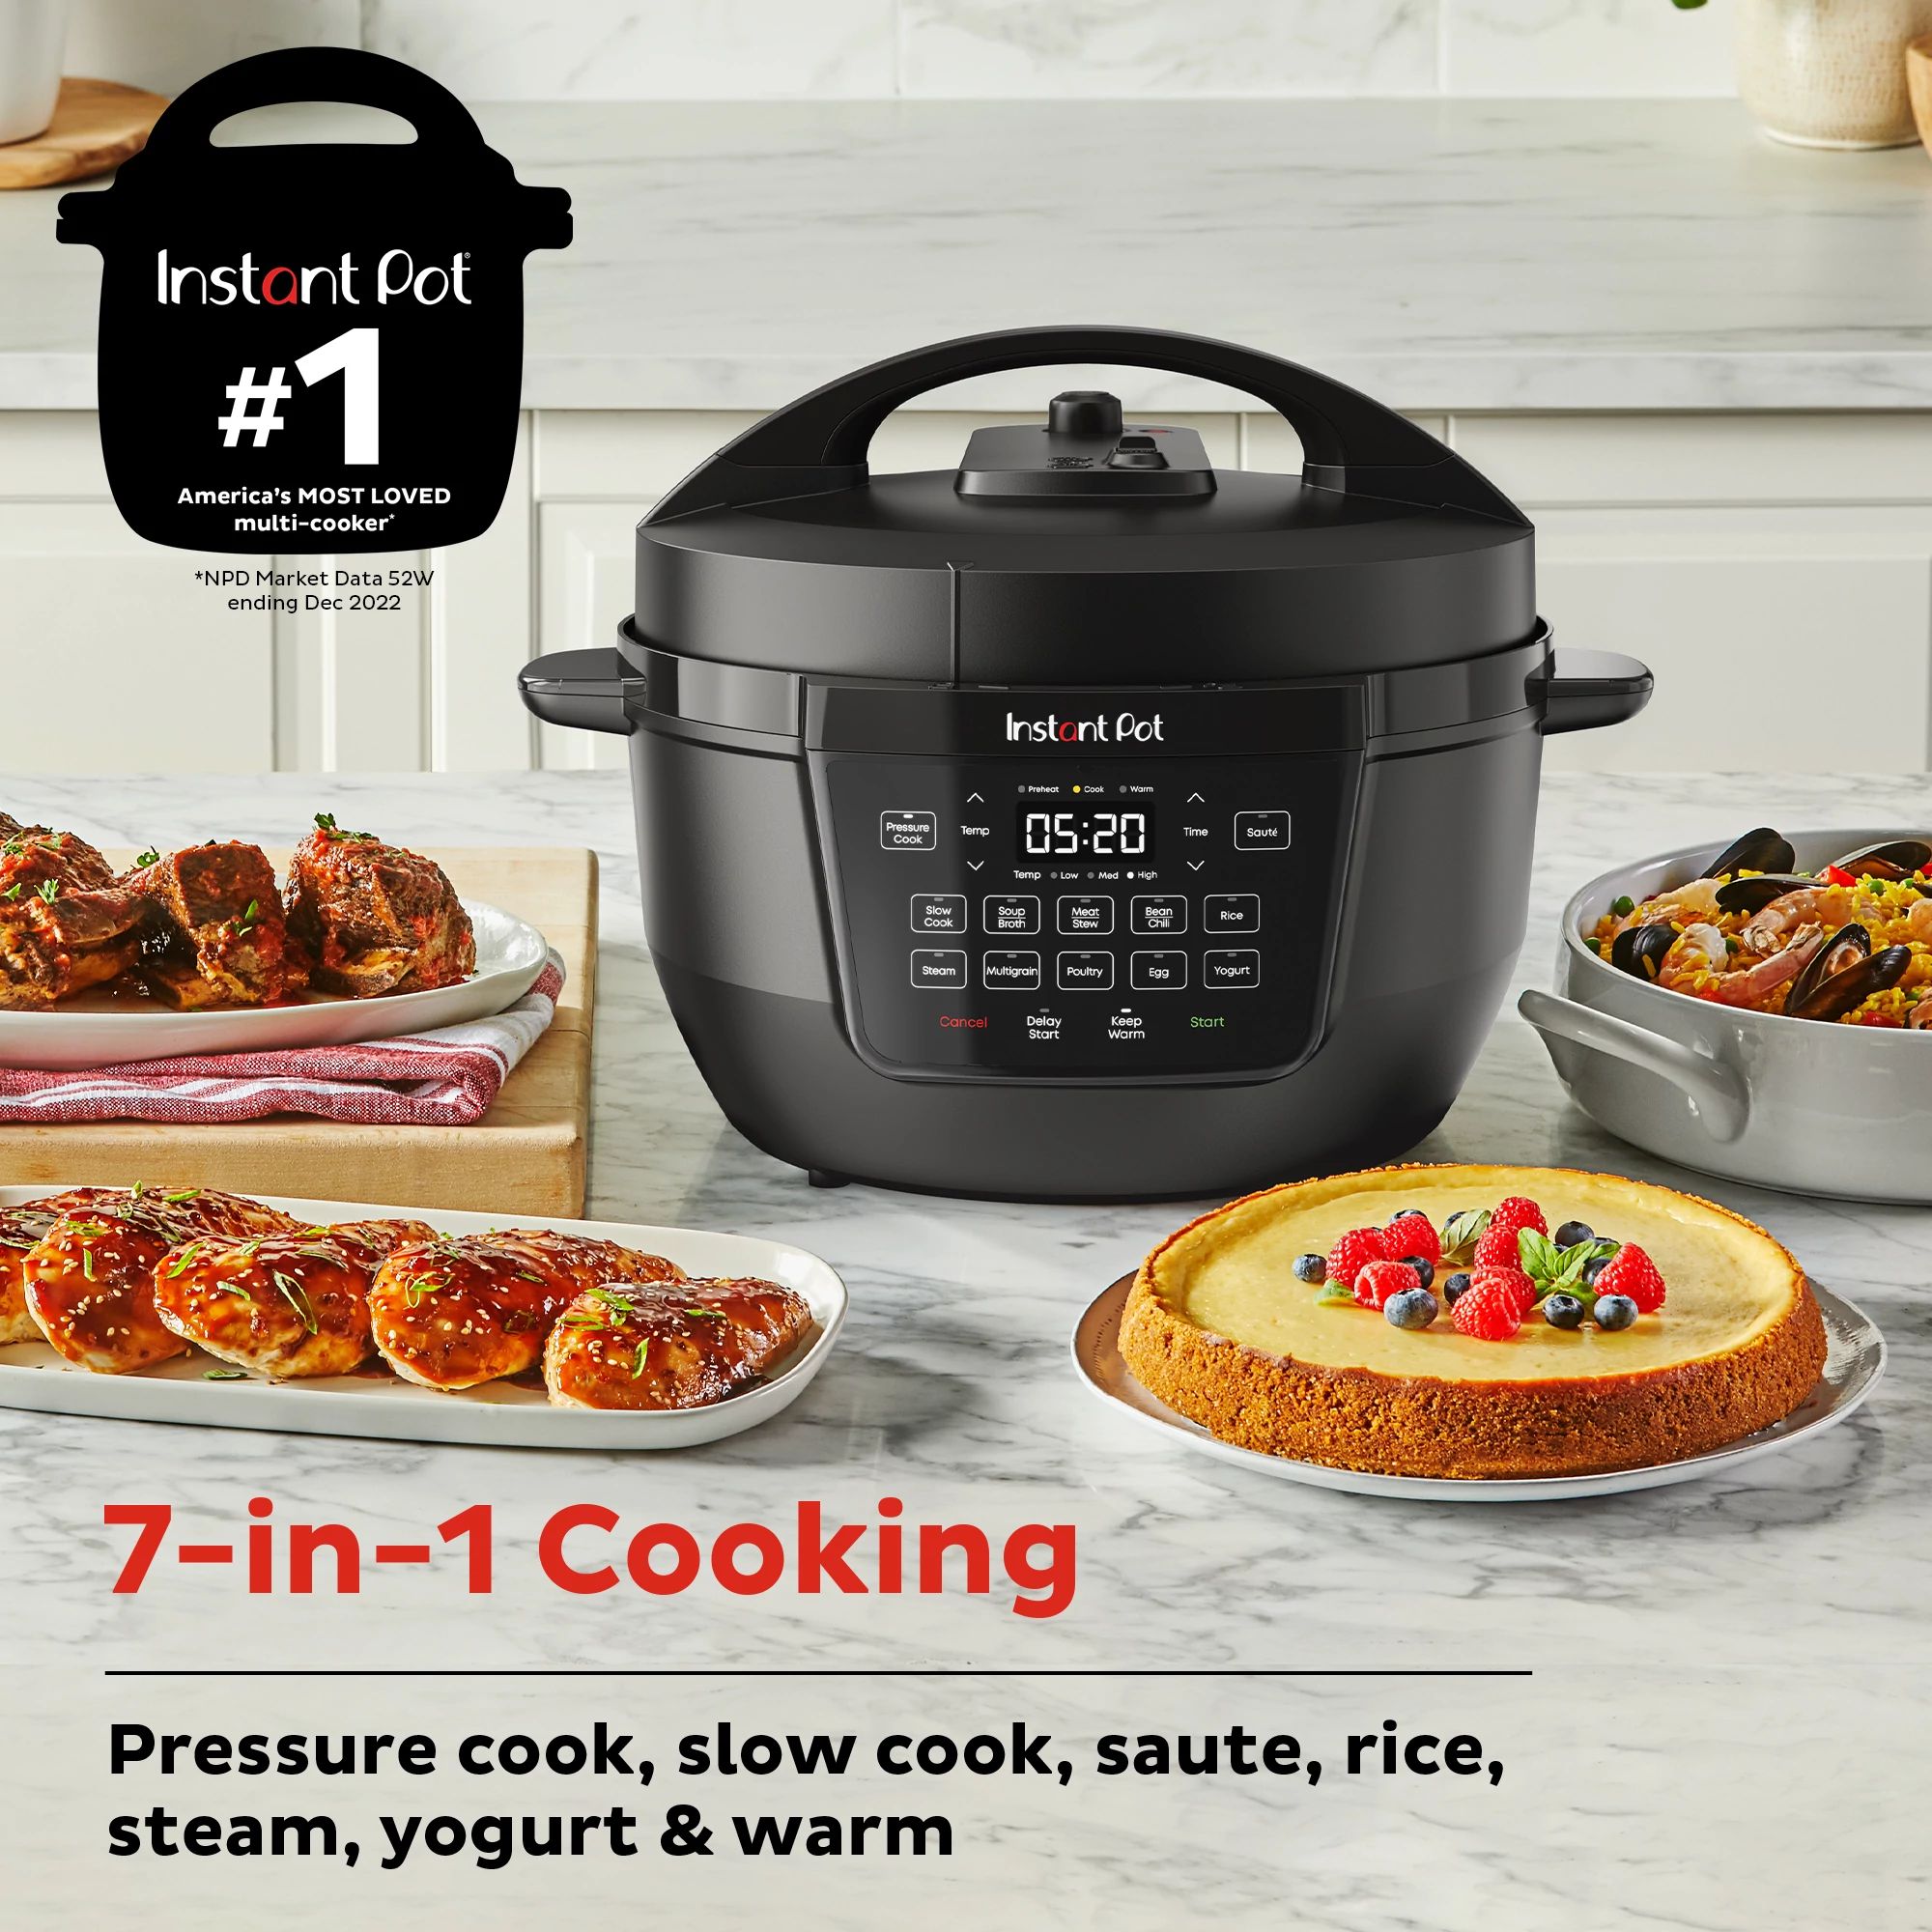 Instant Pot Pro 10-in-1 Pressure Cooker, Slow Cooker, Rice/Grain Cooker,  Steamer, Saute, Sous Vide, Yogurt Maker, Sterilizer, and Warmer, 6 Quart 